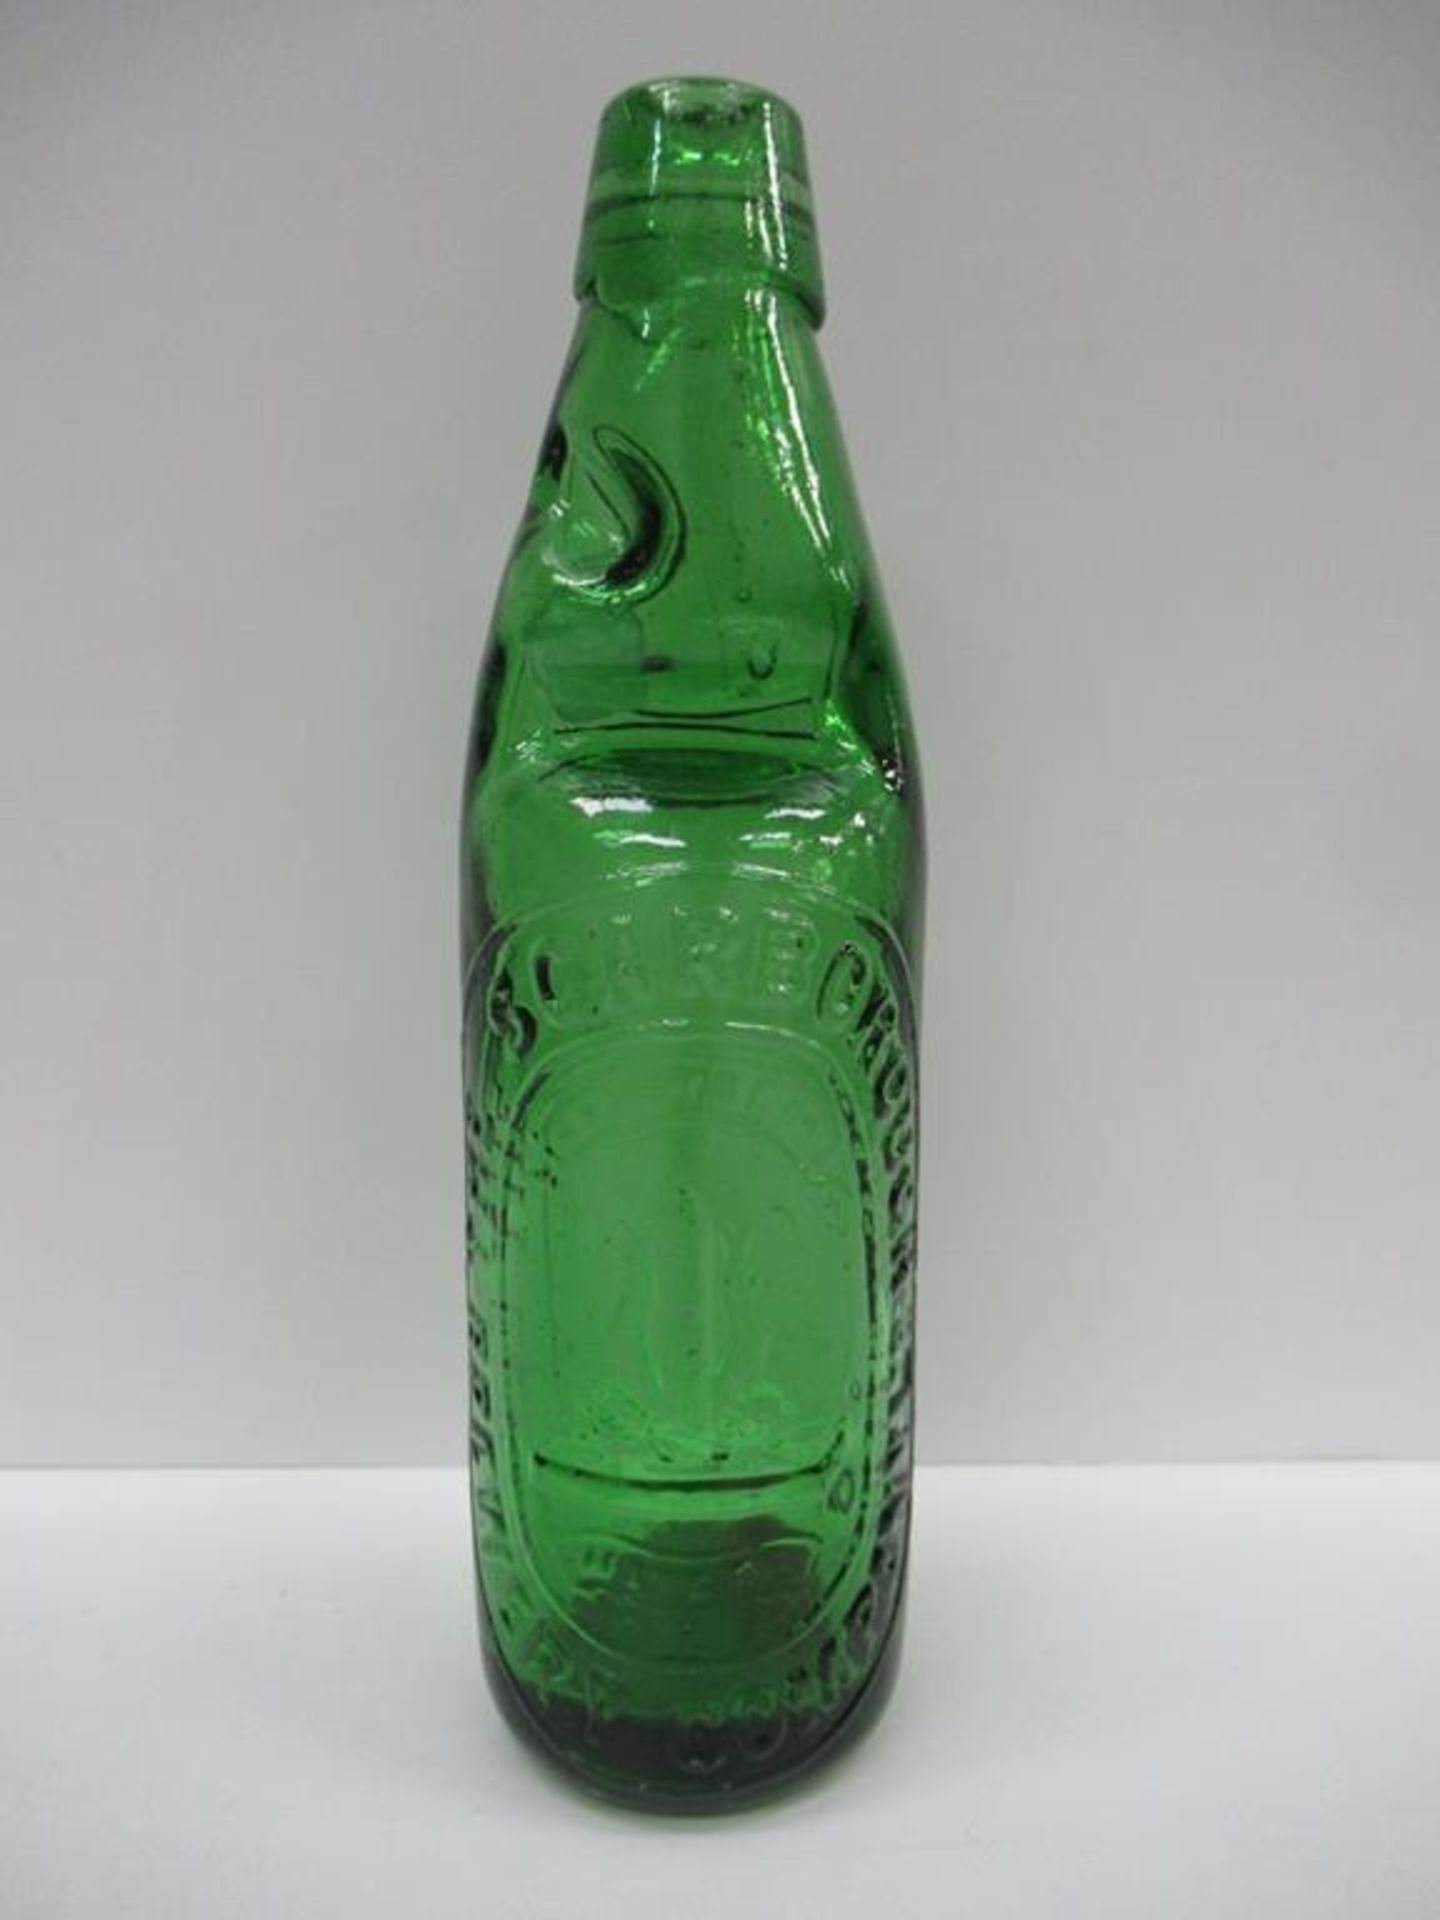 The Scarborough Brewery Co. Ltd coloured codd bottle 10oz